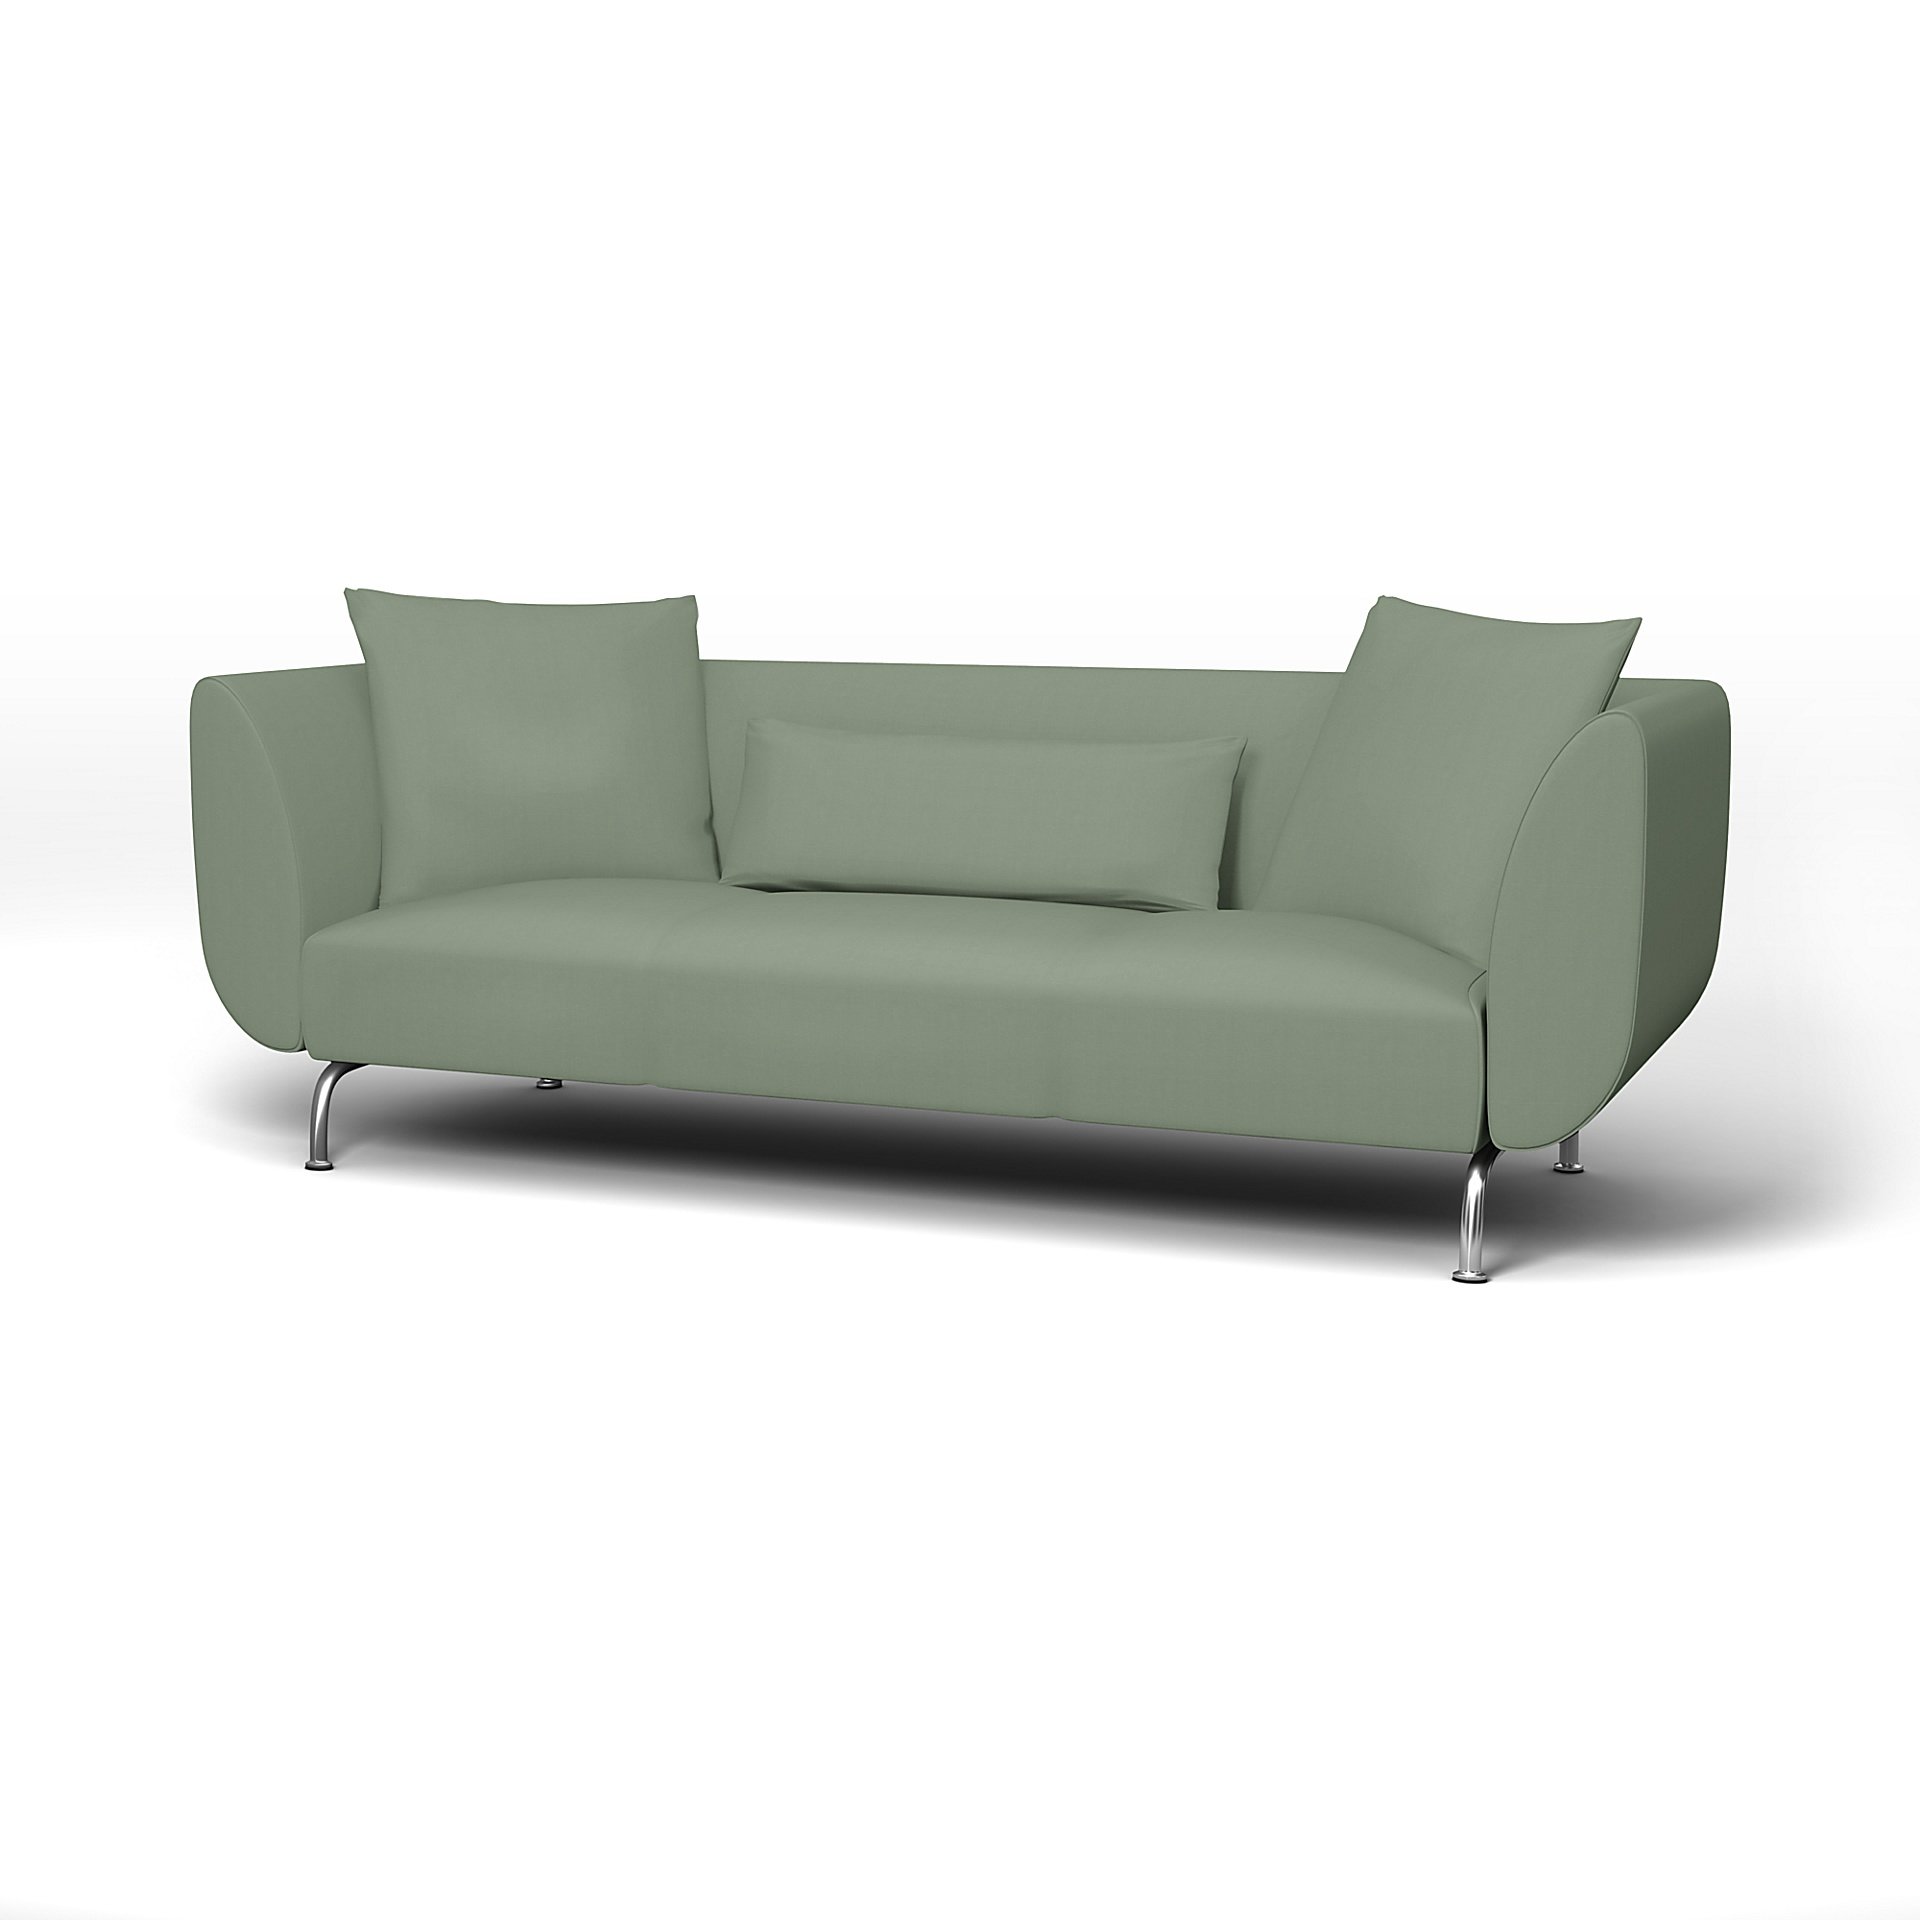 IKEA - Stromstad 3 Seater Sofa Cover, Seagrass, Cotton - Bemz